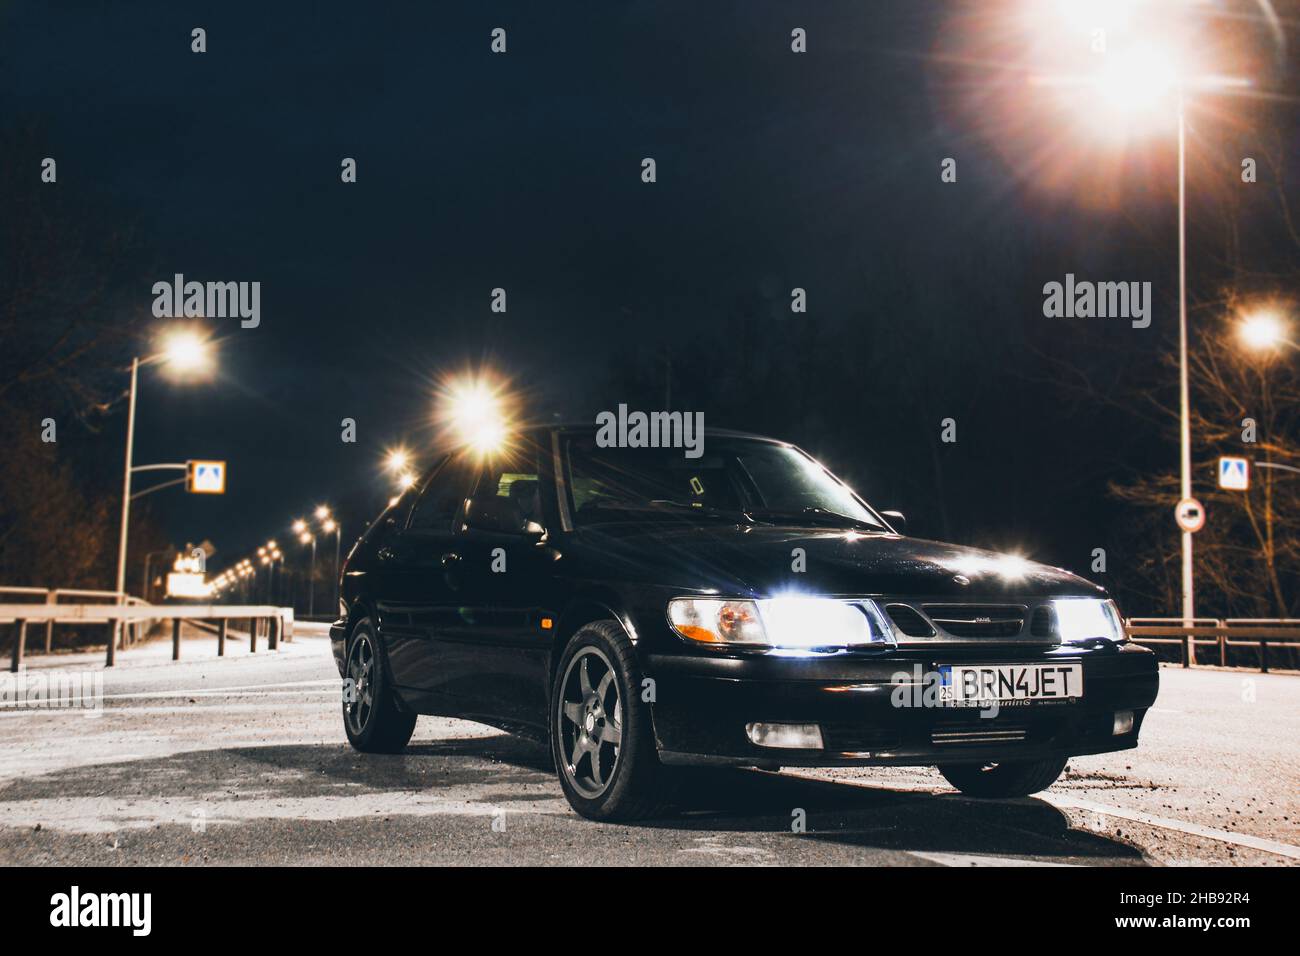 Chernigov, Ukraine - March 20, 2021: Old Swedish car Saab 900 Turbo. Car on the night road. Night photo Stock Photo